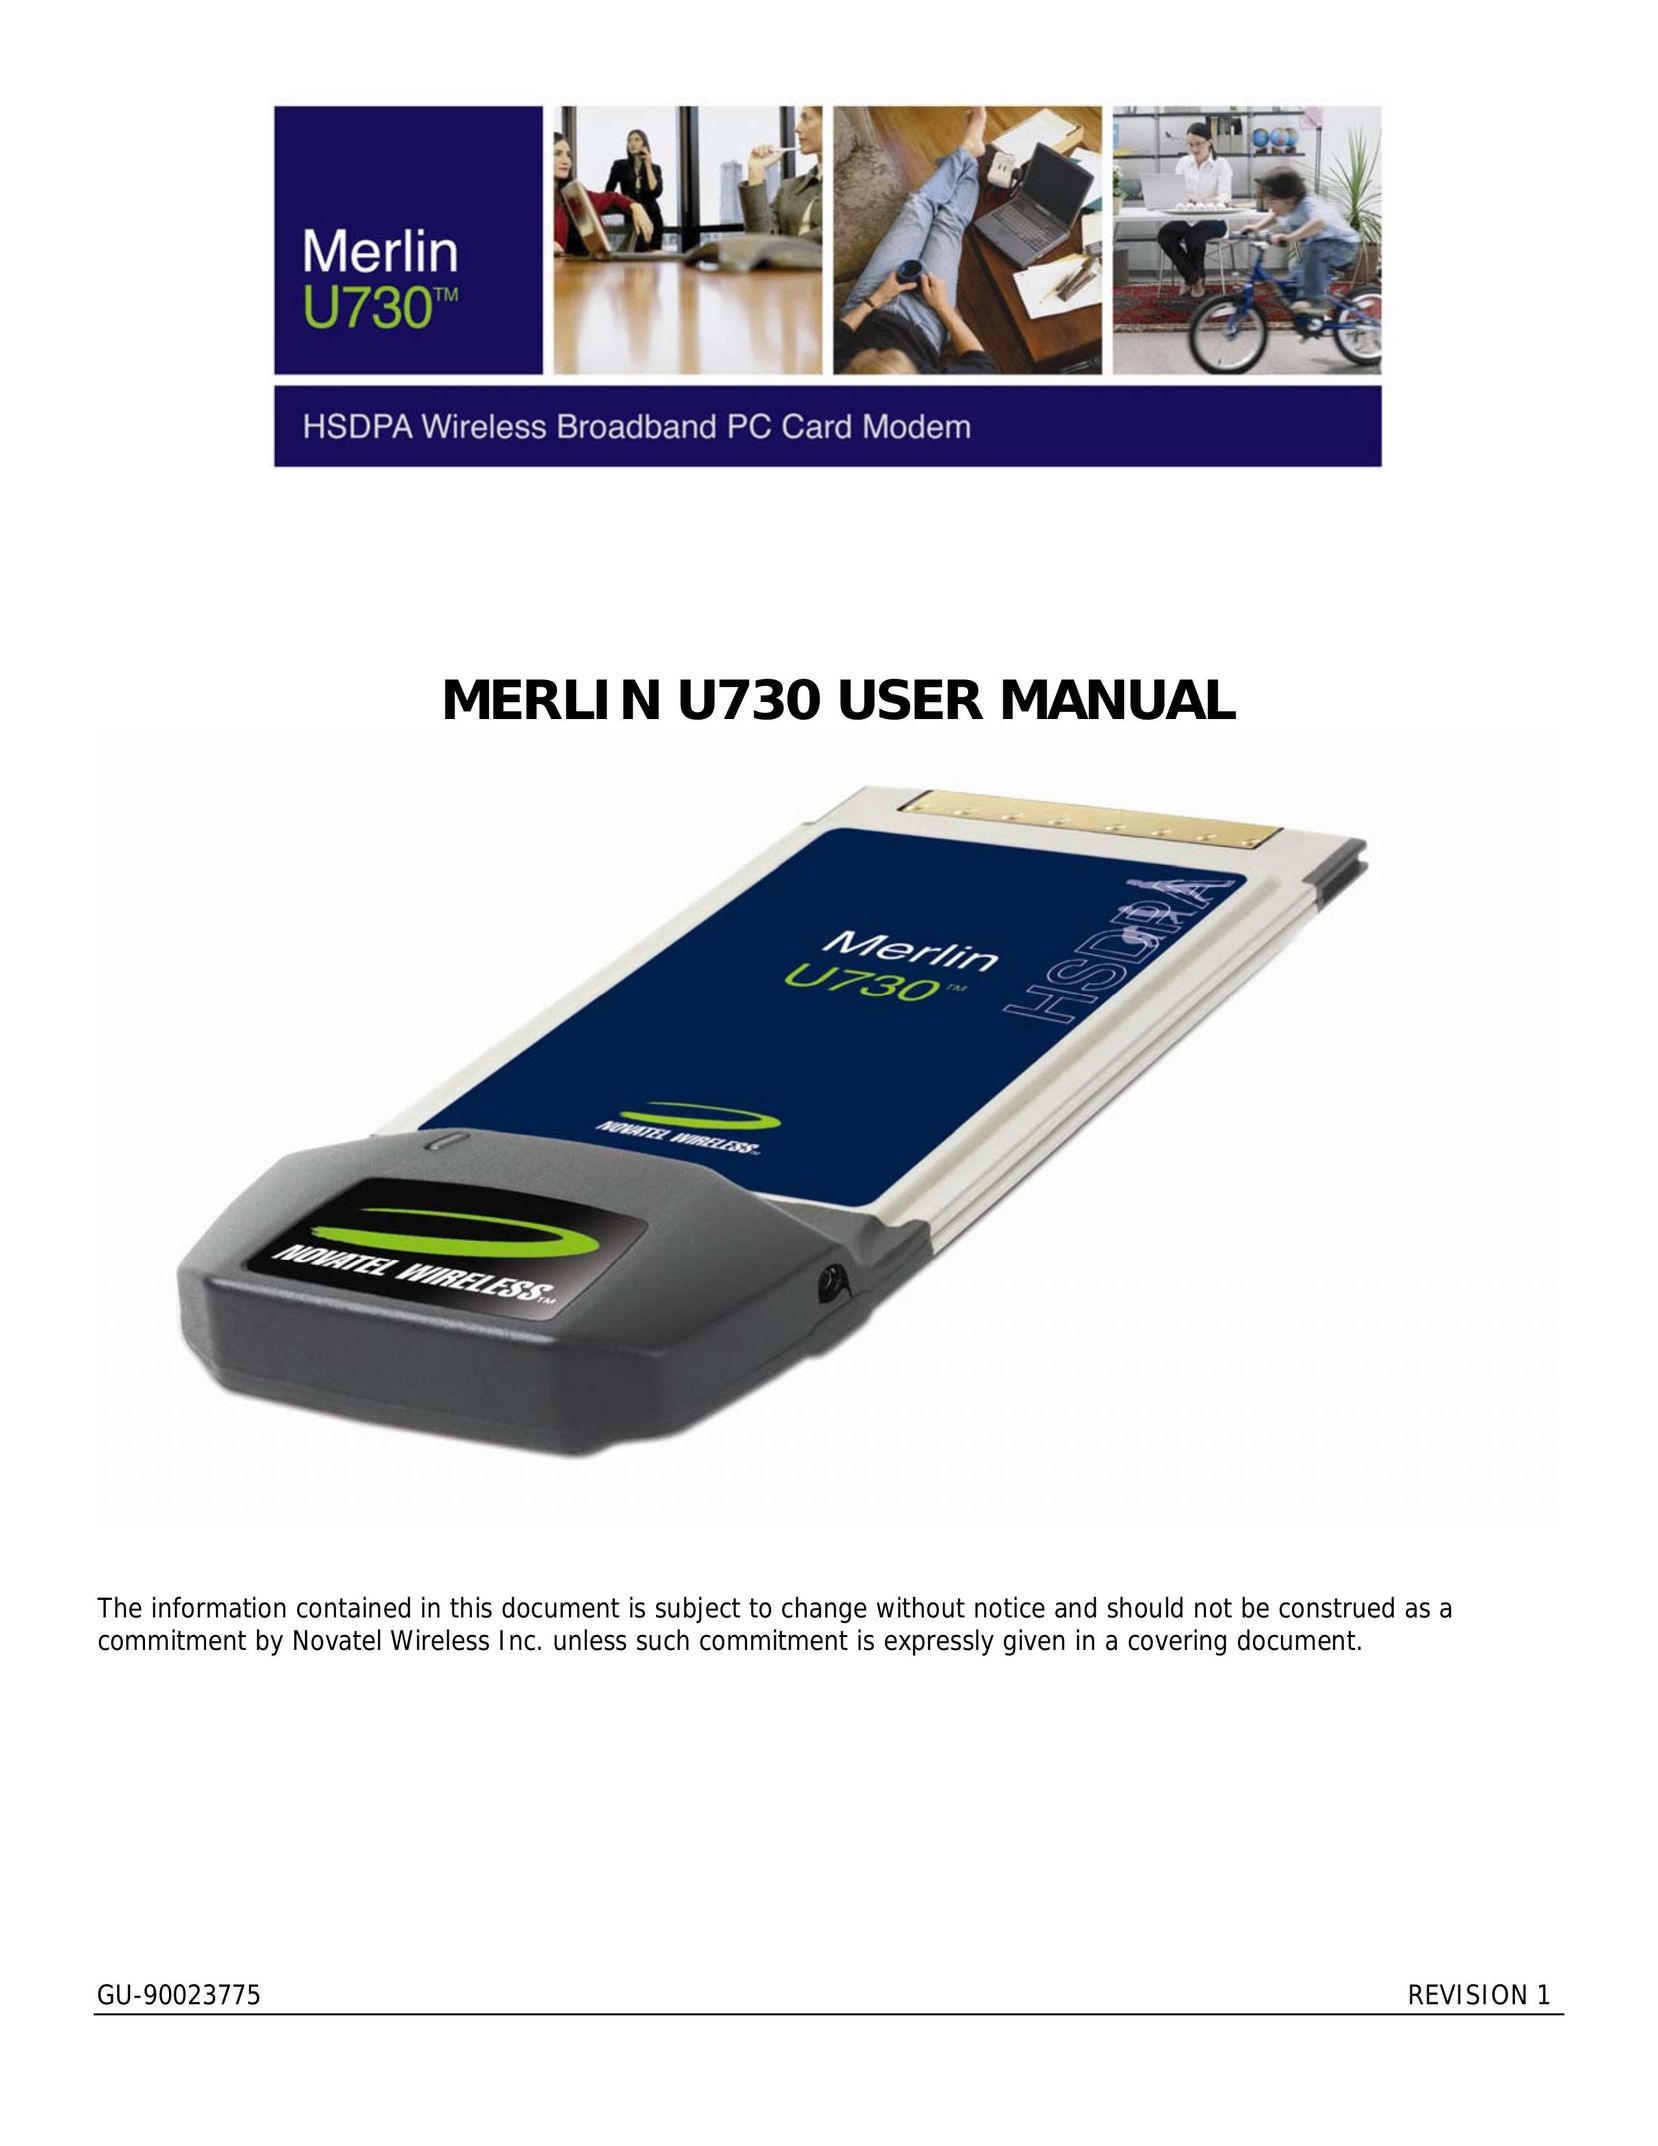 Novatel Wireless GU-90023775 Network Card User Manual